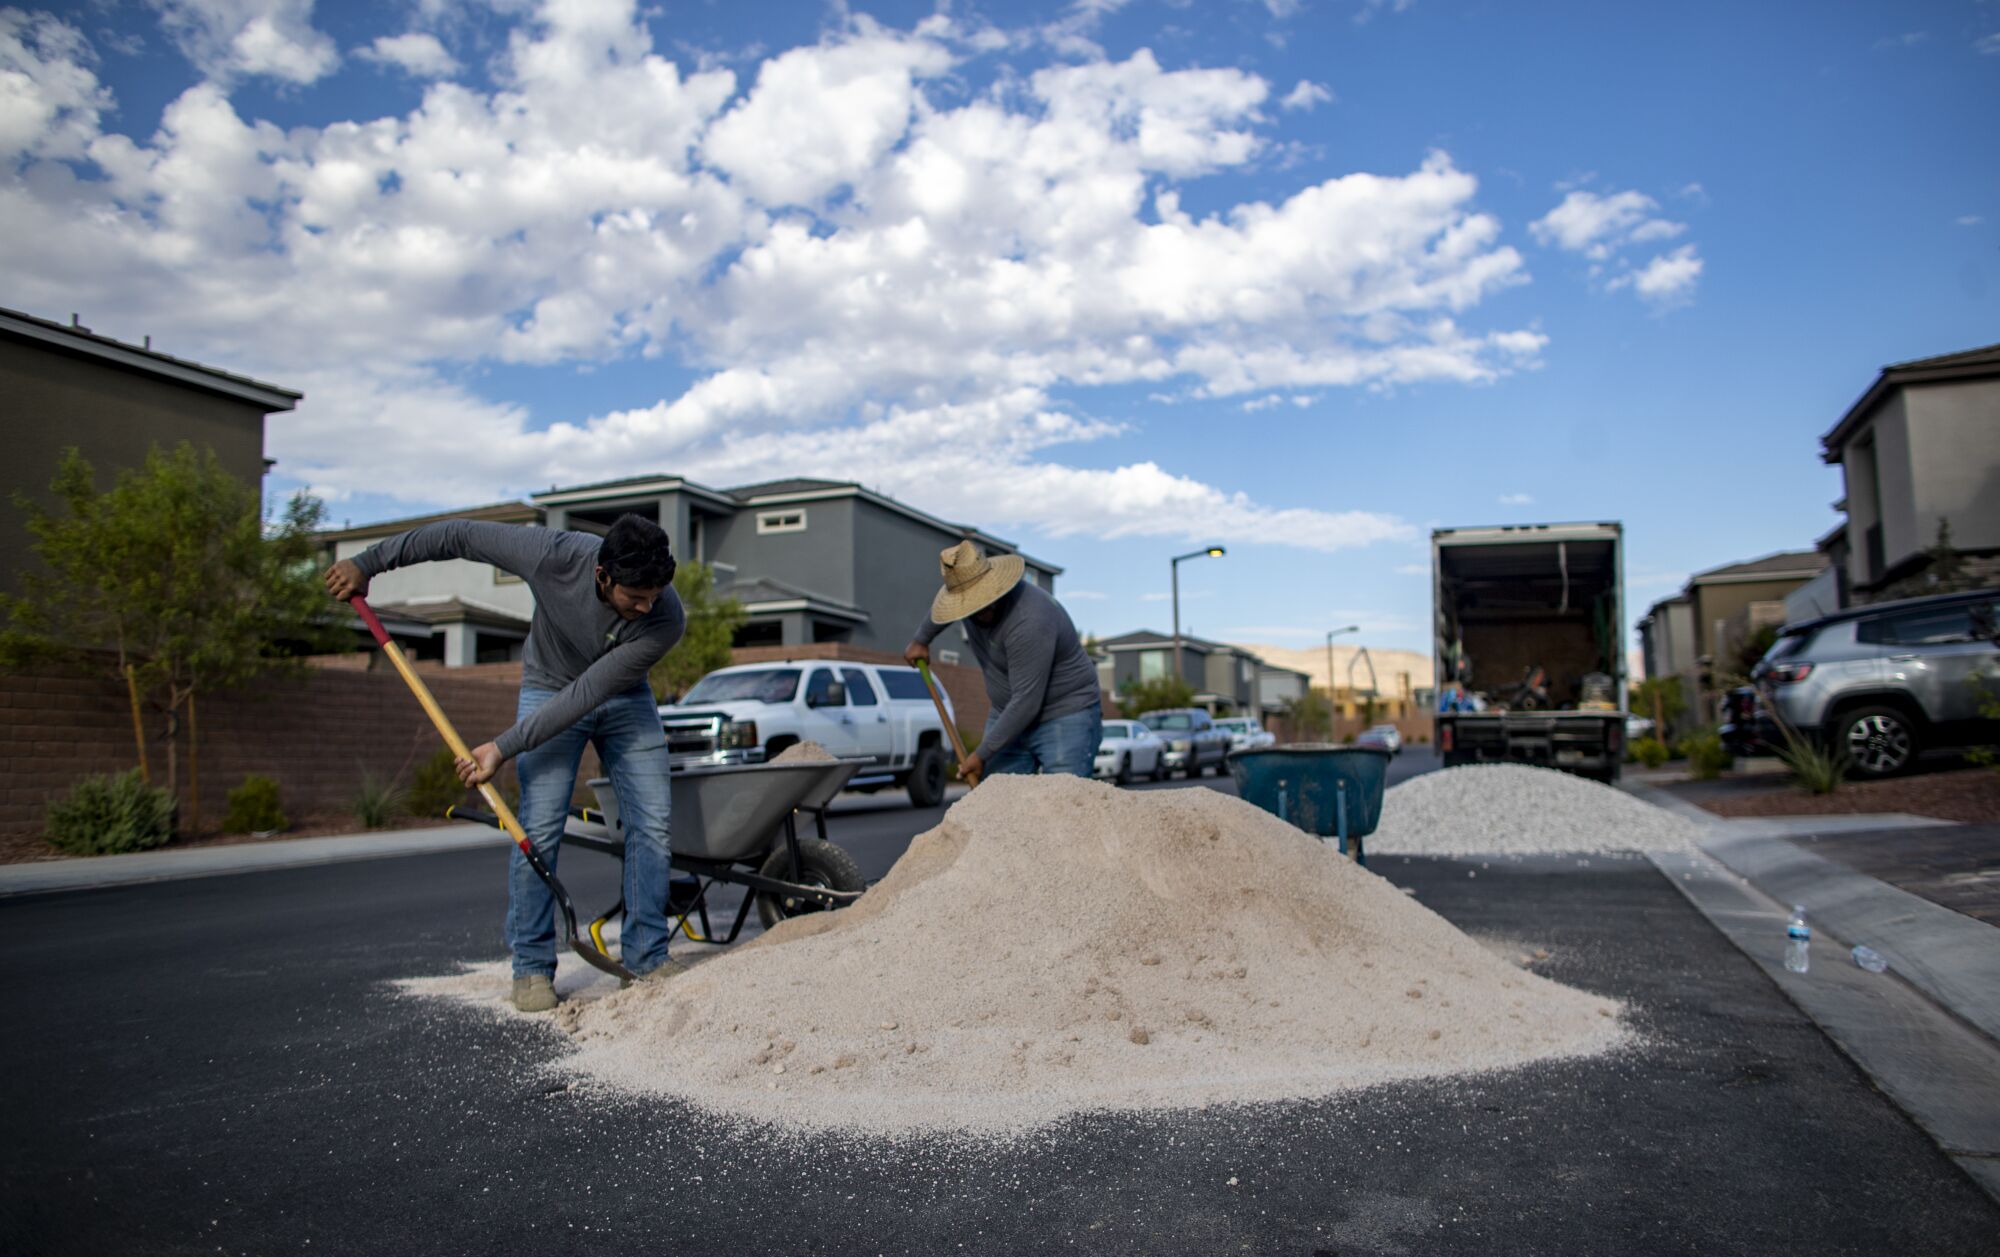 Workers shovel sandy gravel into a wheelbarrow in a neighborhood